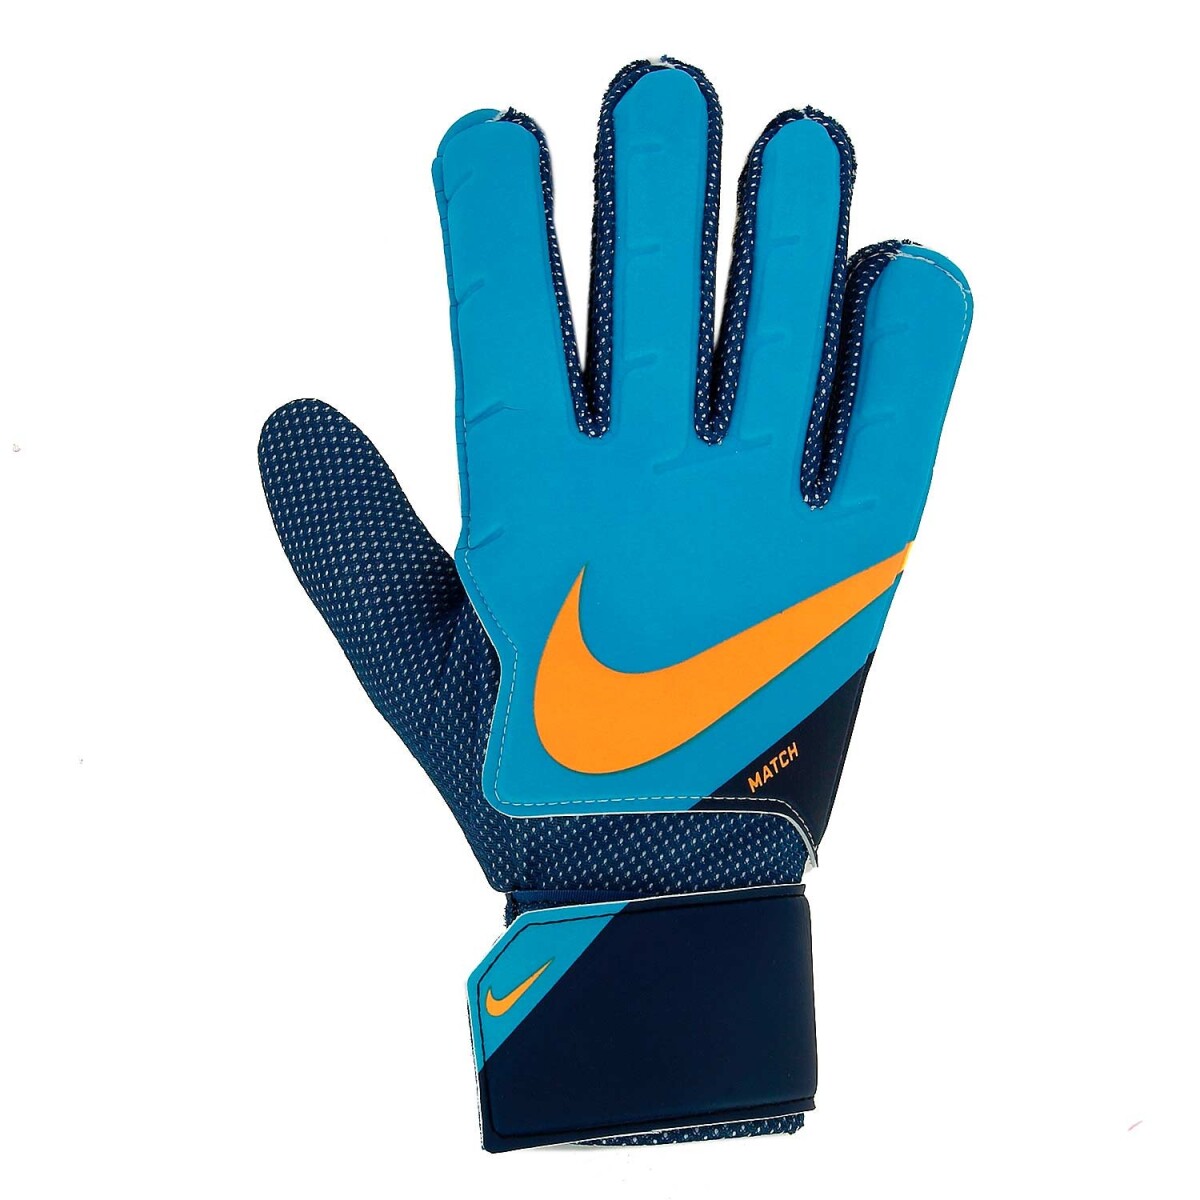 Guante Nike GK Match Blue/Marine - Color Único 